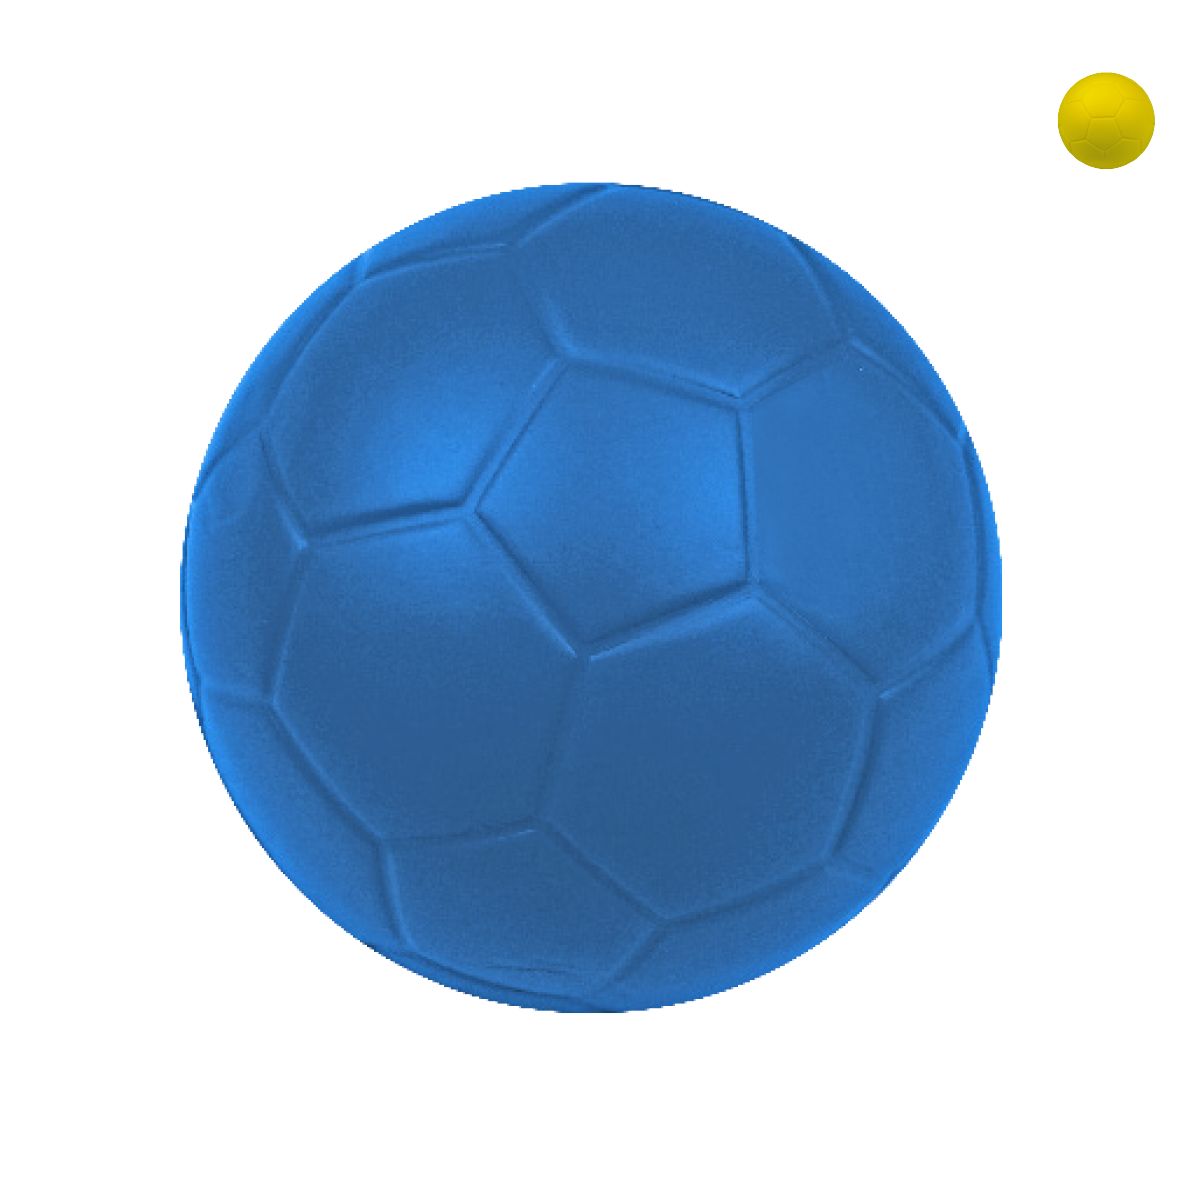 067233_ballon_de_handball_mousse_uni_dynamique_sportifrance (1)